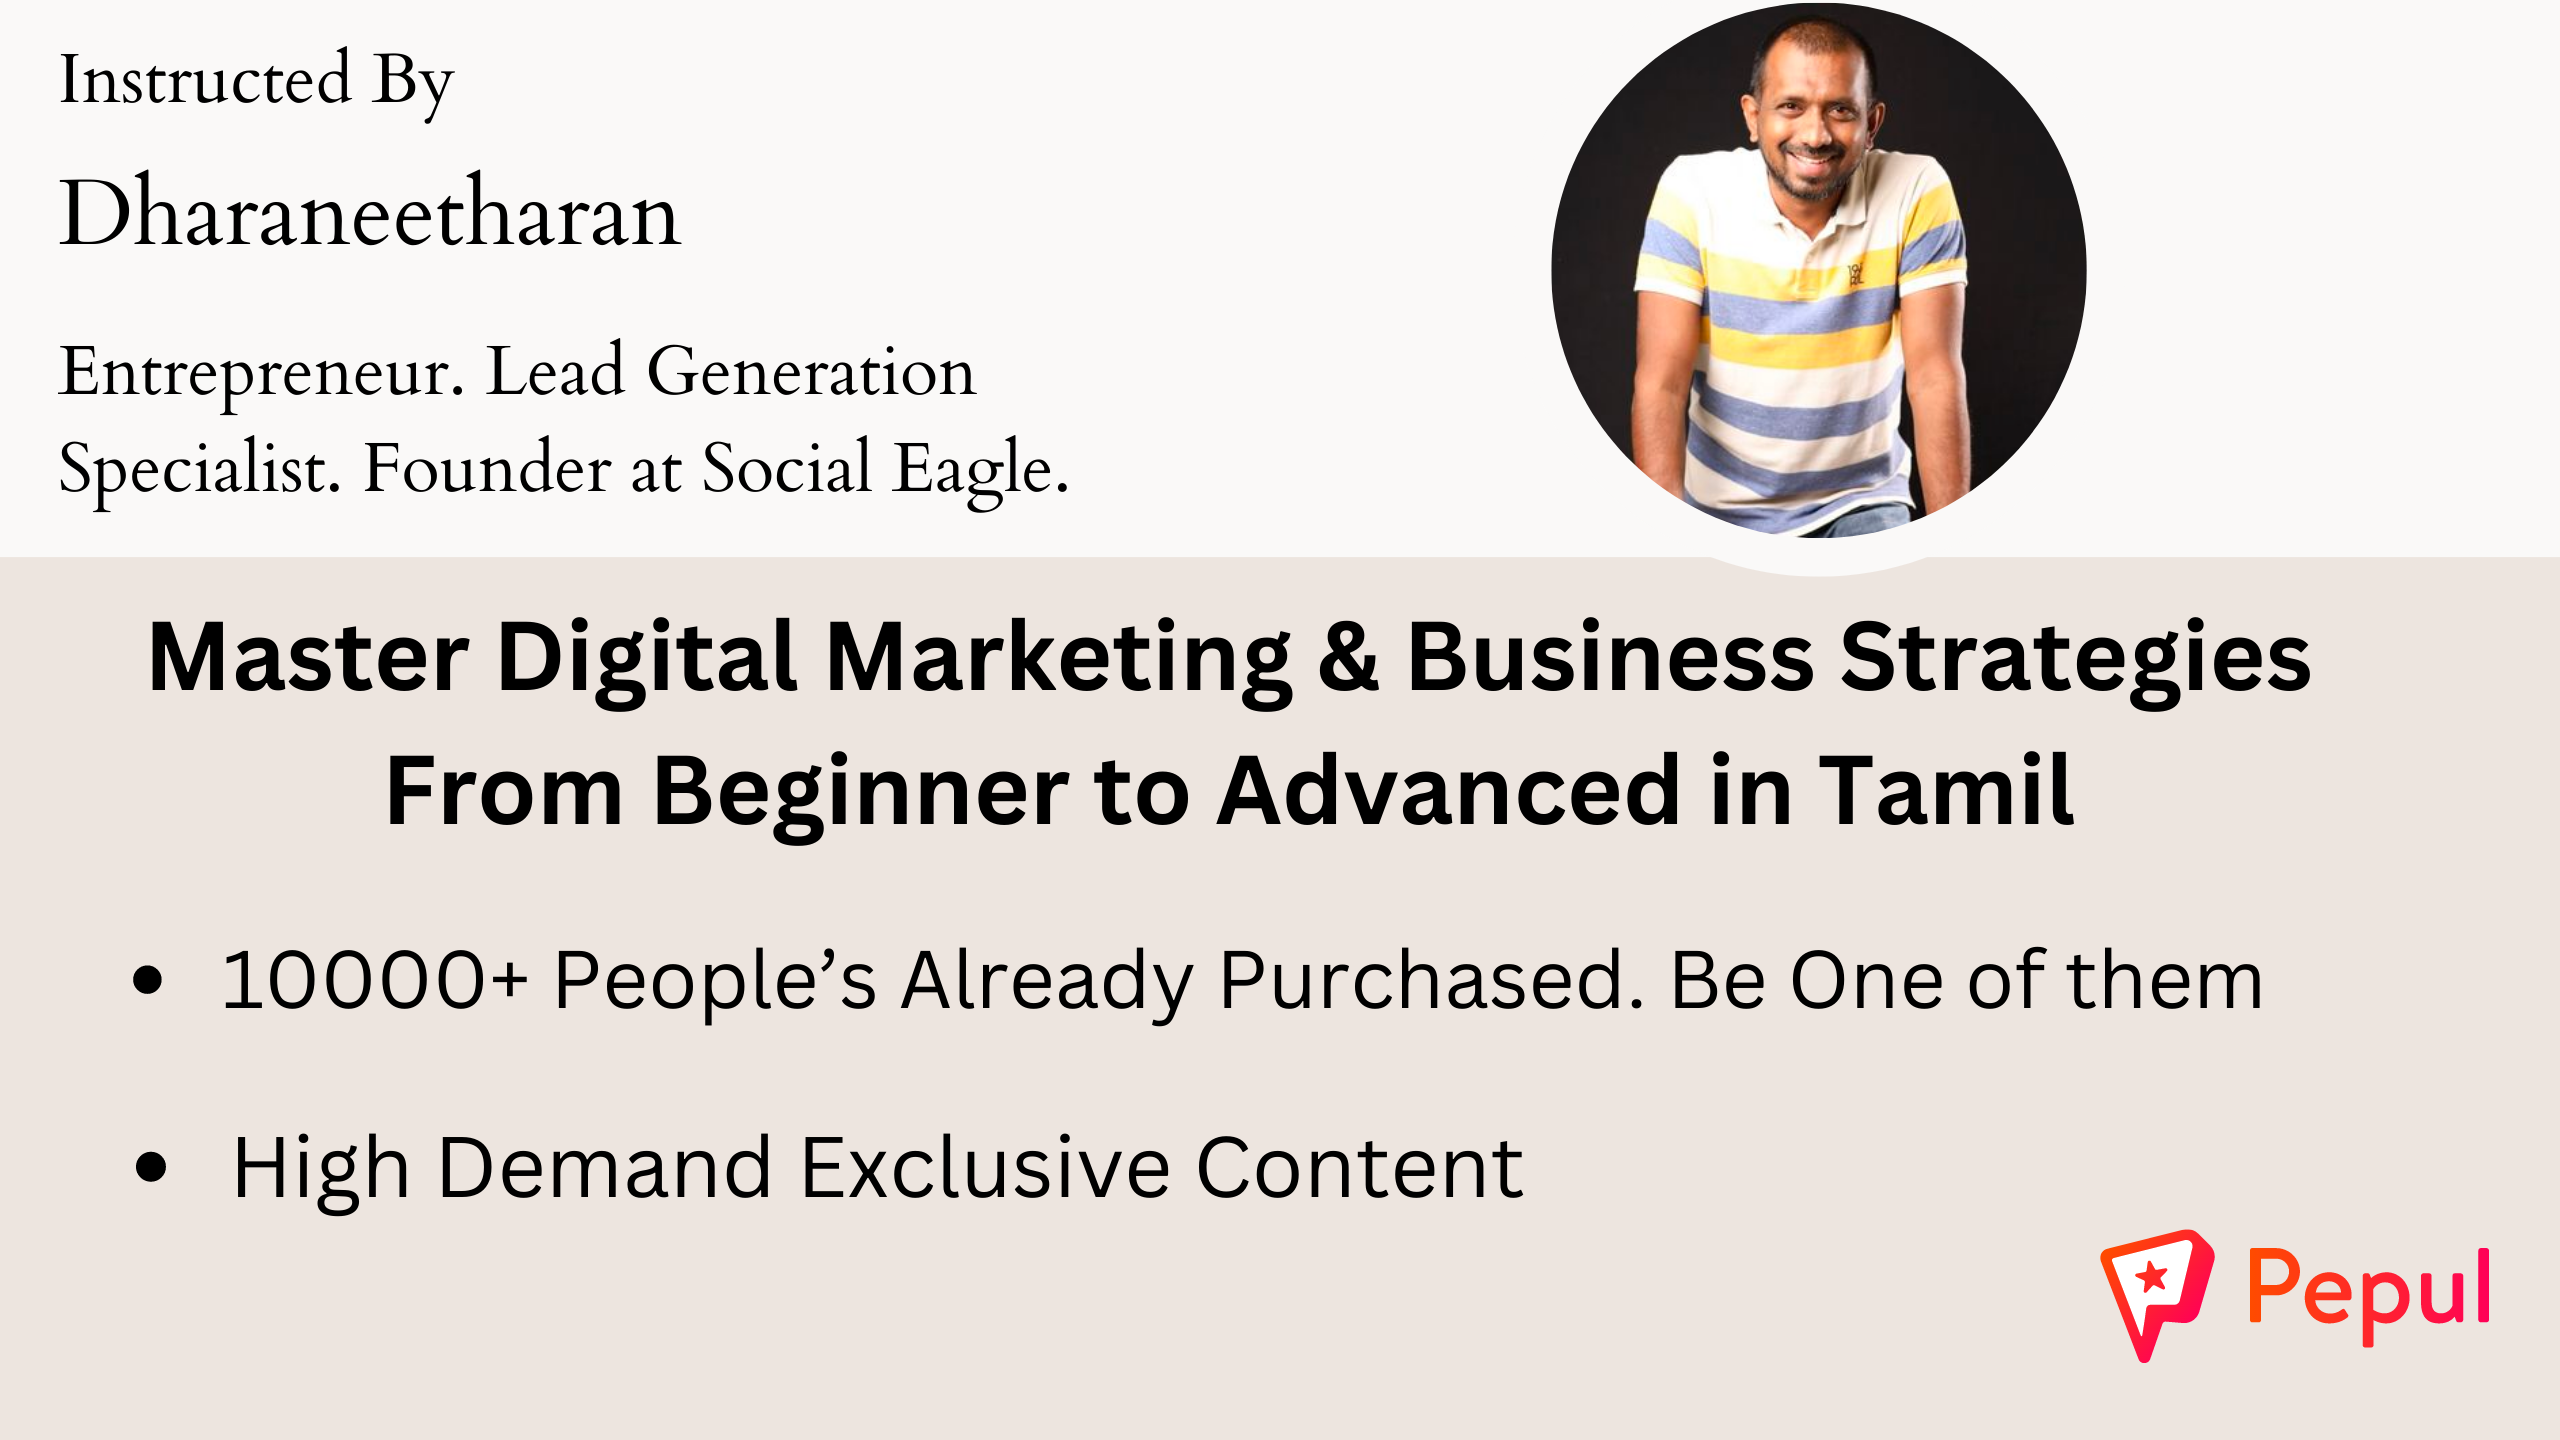 Digital Marketing & Business Strategies Course